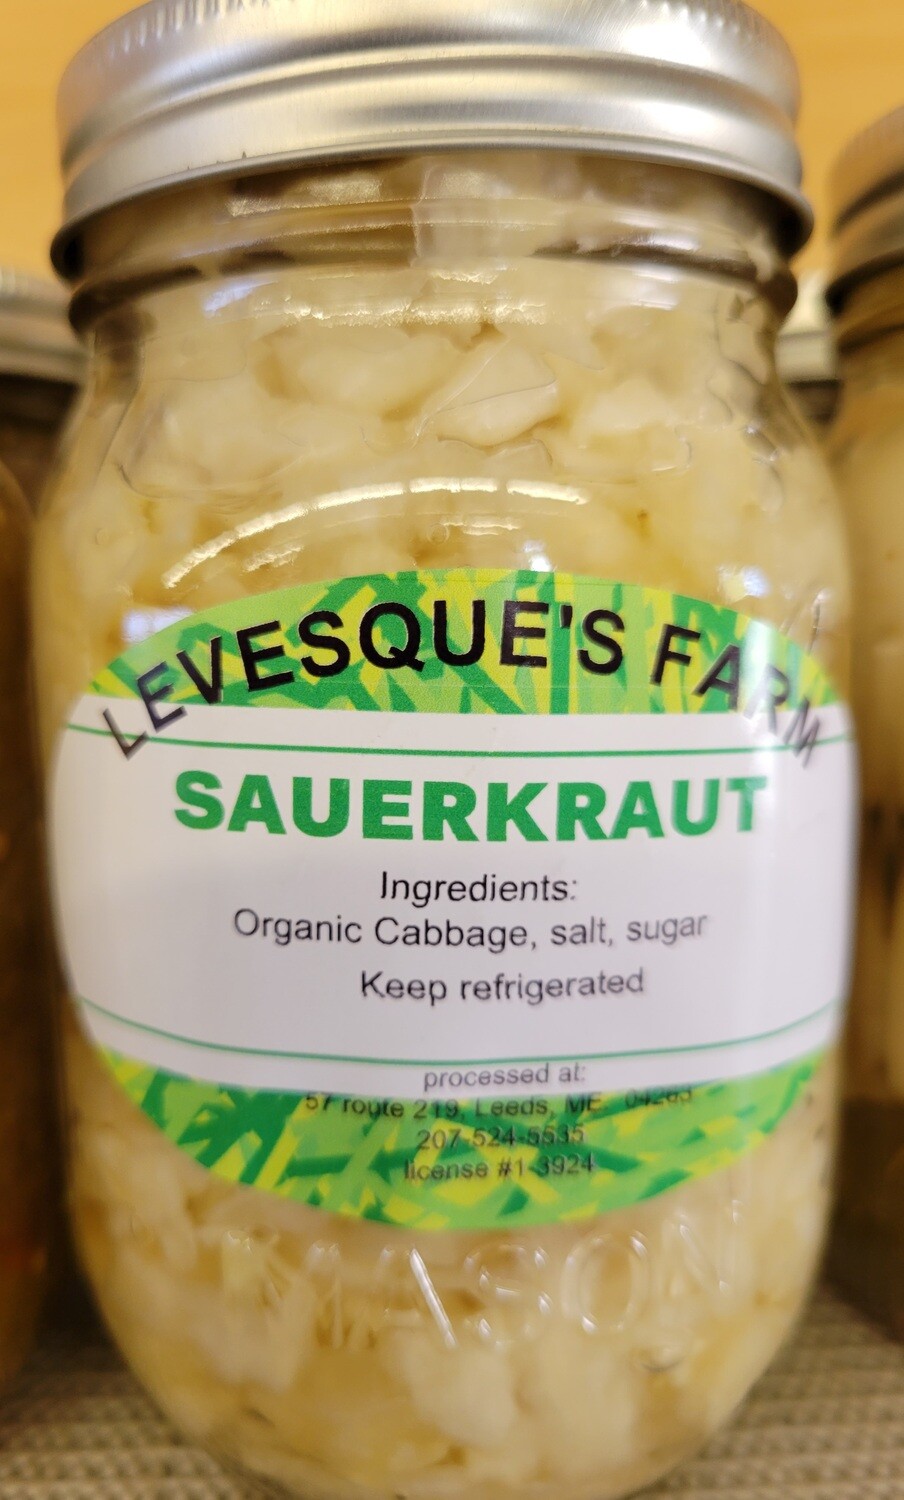 Levesque's Farm - Sauerkraut